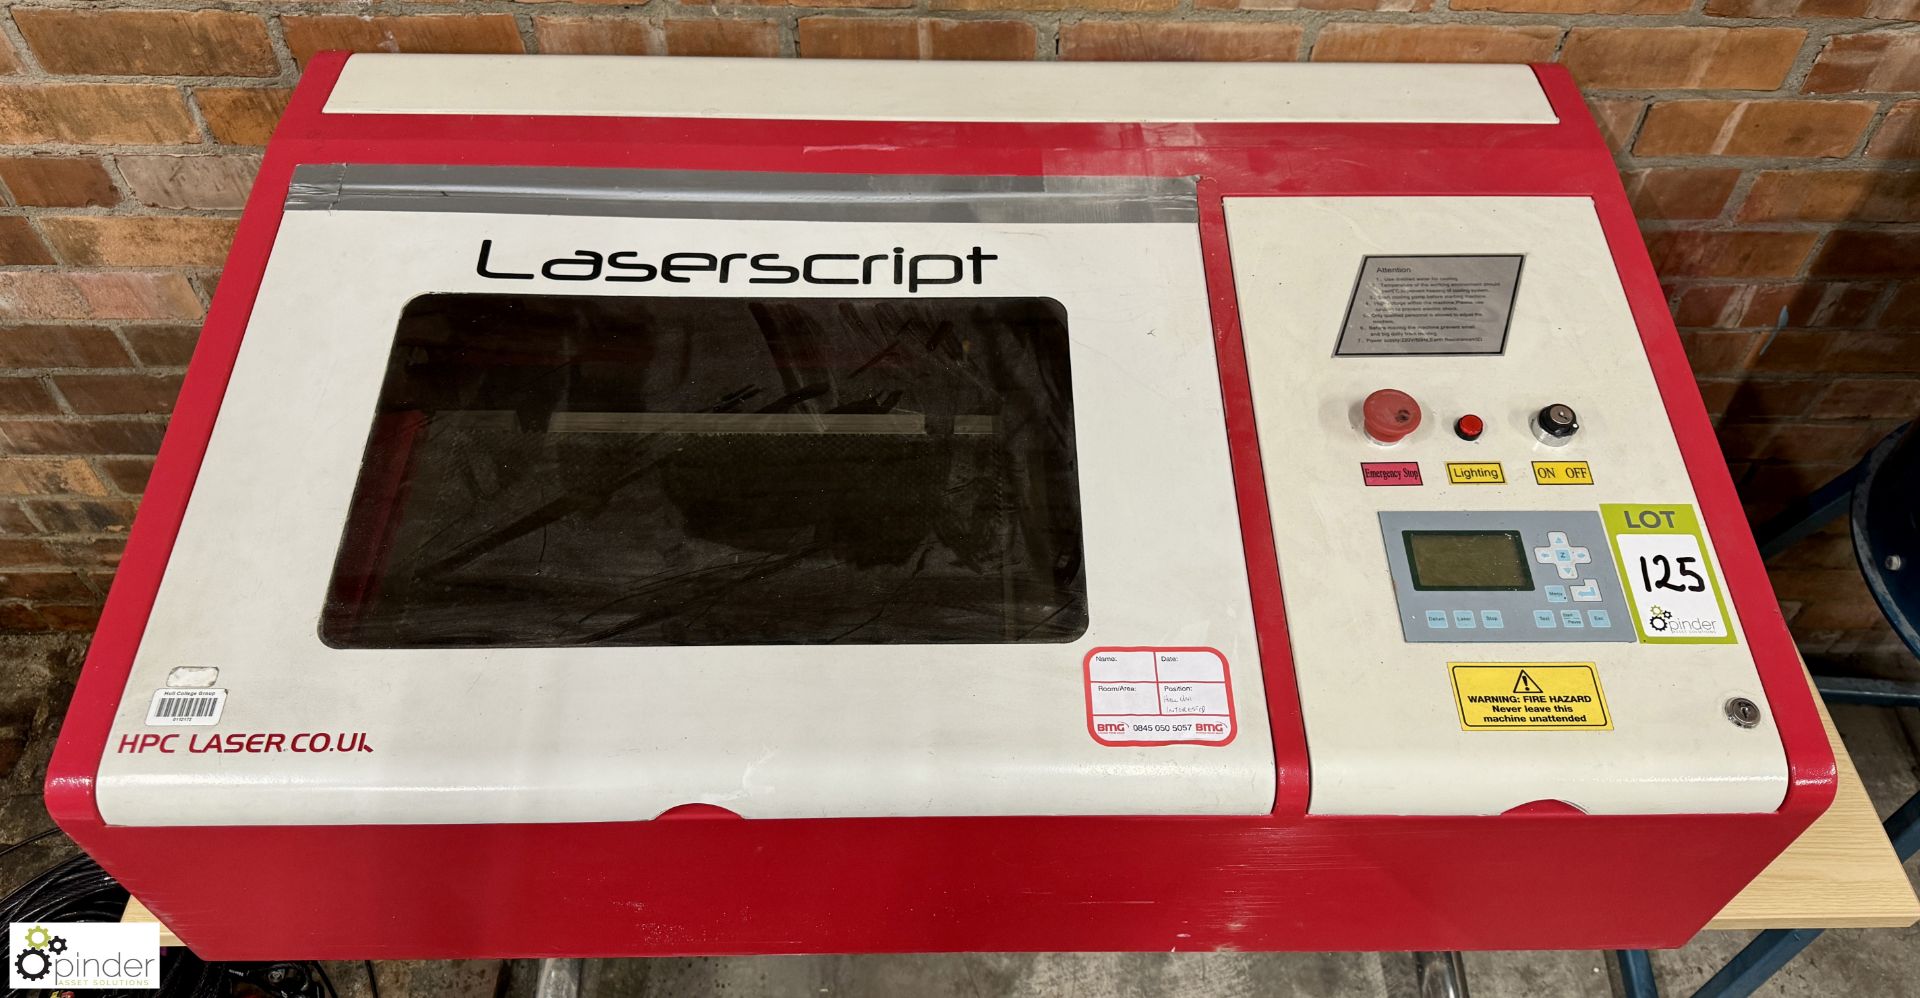 HPC Laser Laserscript programmable desk top Laser Cutter, 440mm x 260mm, working area, 240volts - Image 2 of 6